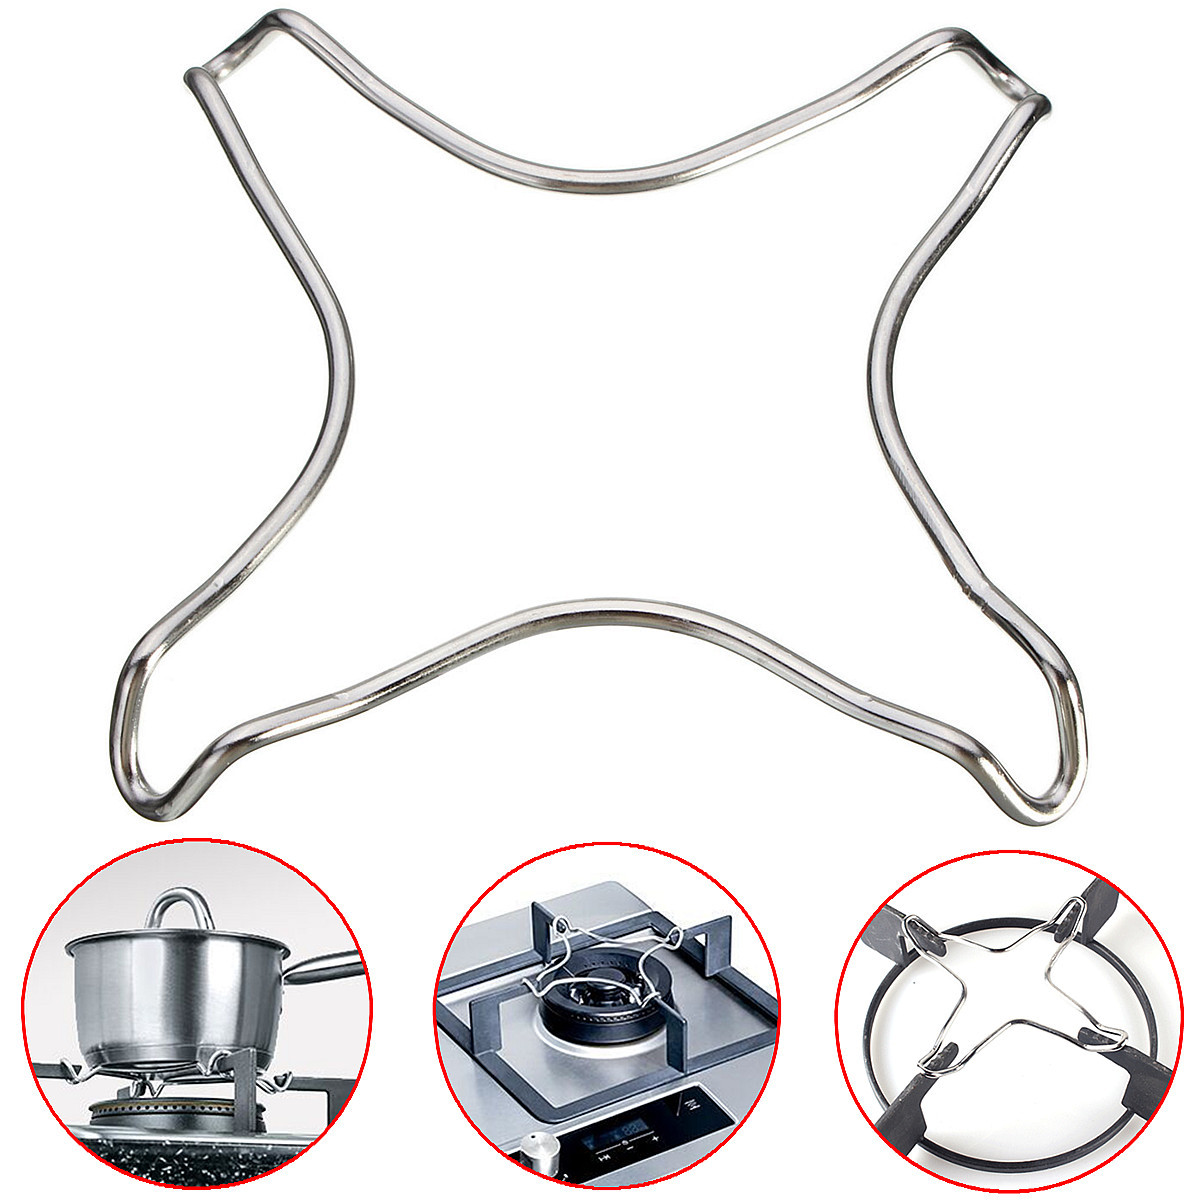 Chrome-Plating-Steel-Metal-Stove-Top-Coffee-Maker-Moka-Trivet-Pot-Stand-Gas-Cooker-Hob-1371565